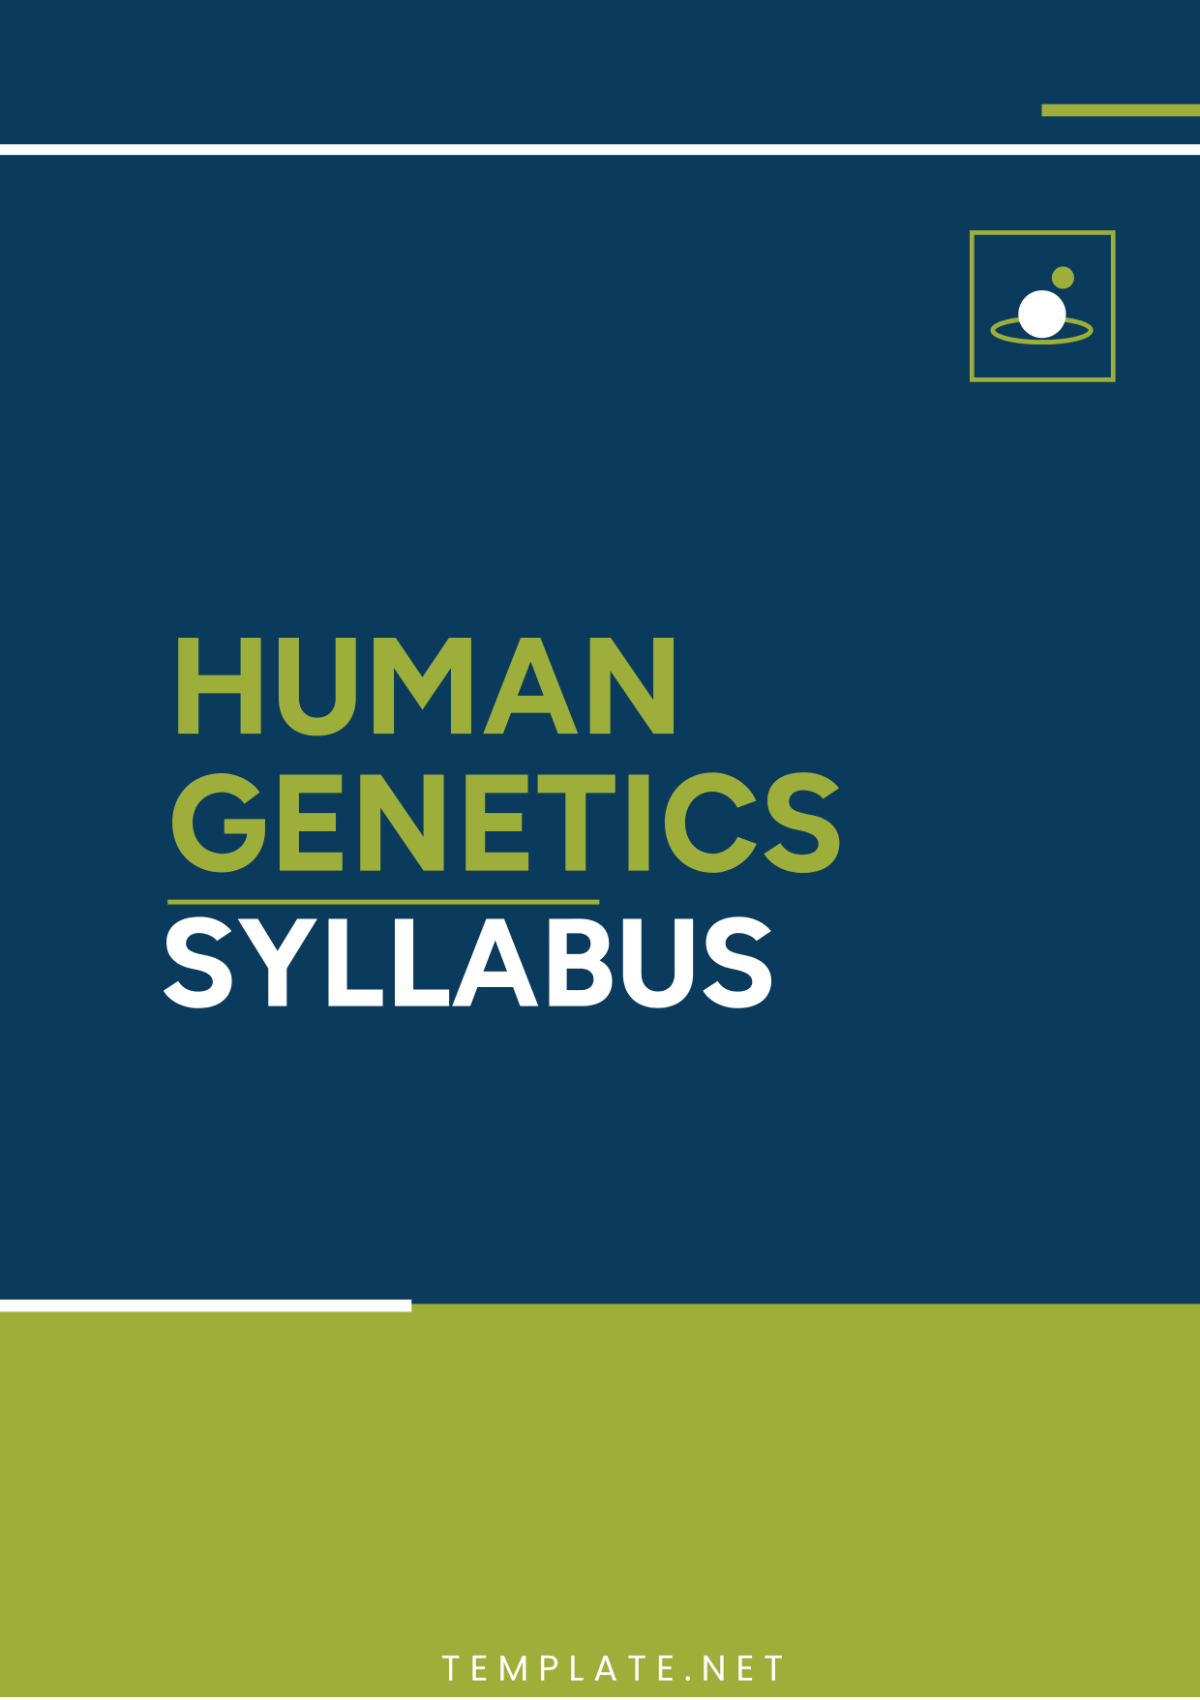 Human Genetics Syllabus Template